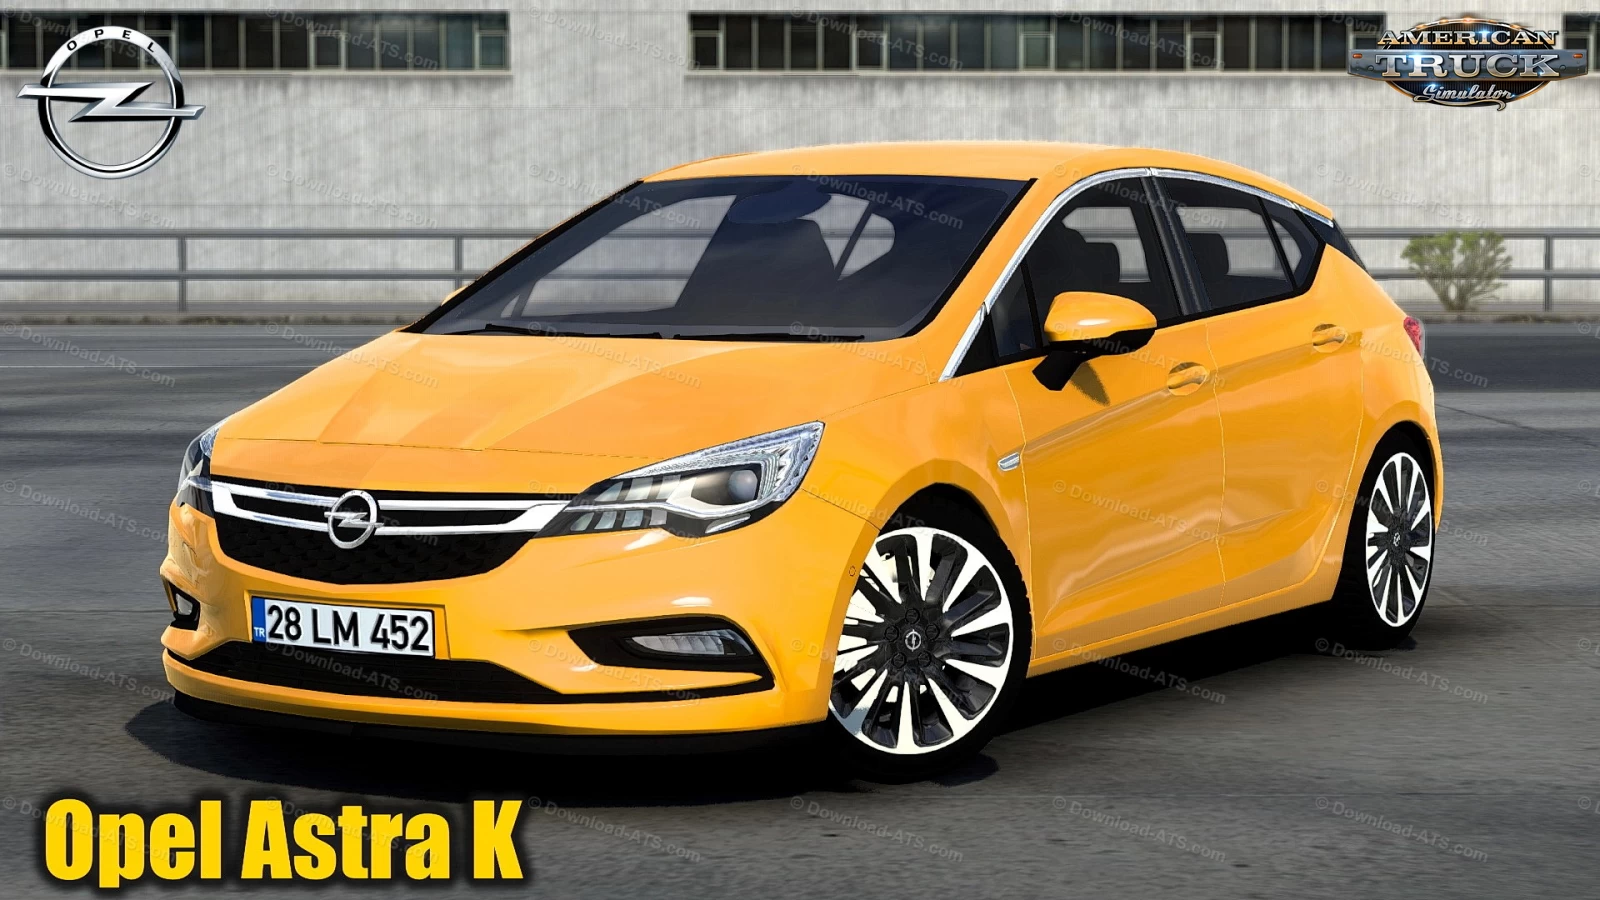 Opel Astra K + Interior v2.1 (1.45.x) for ATS